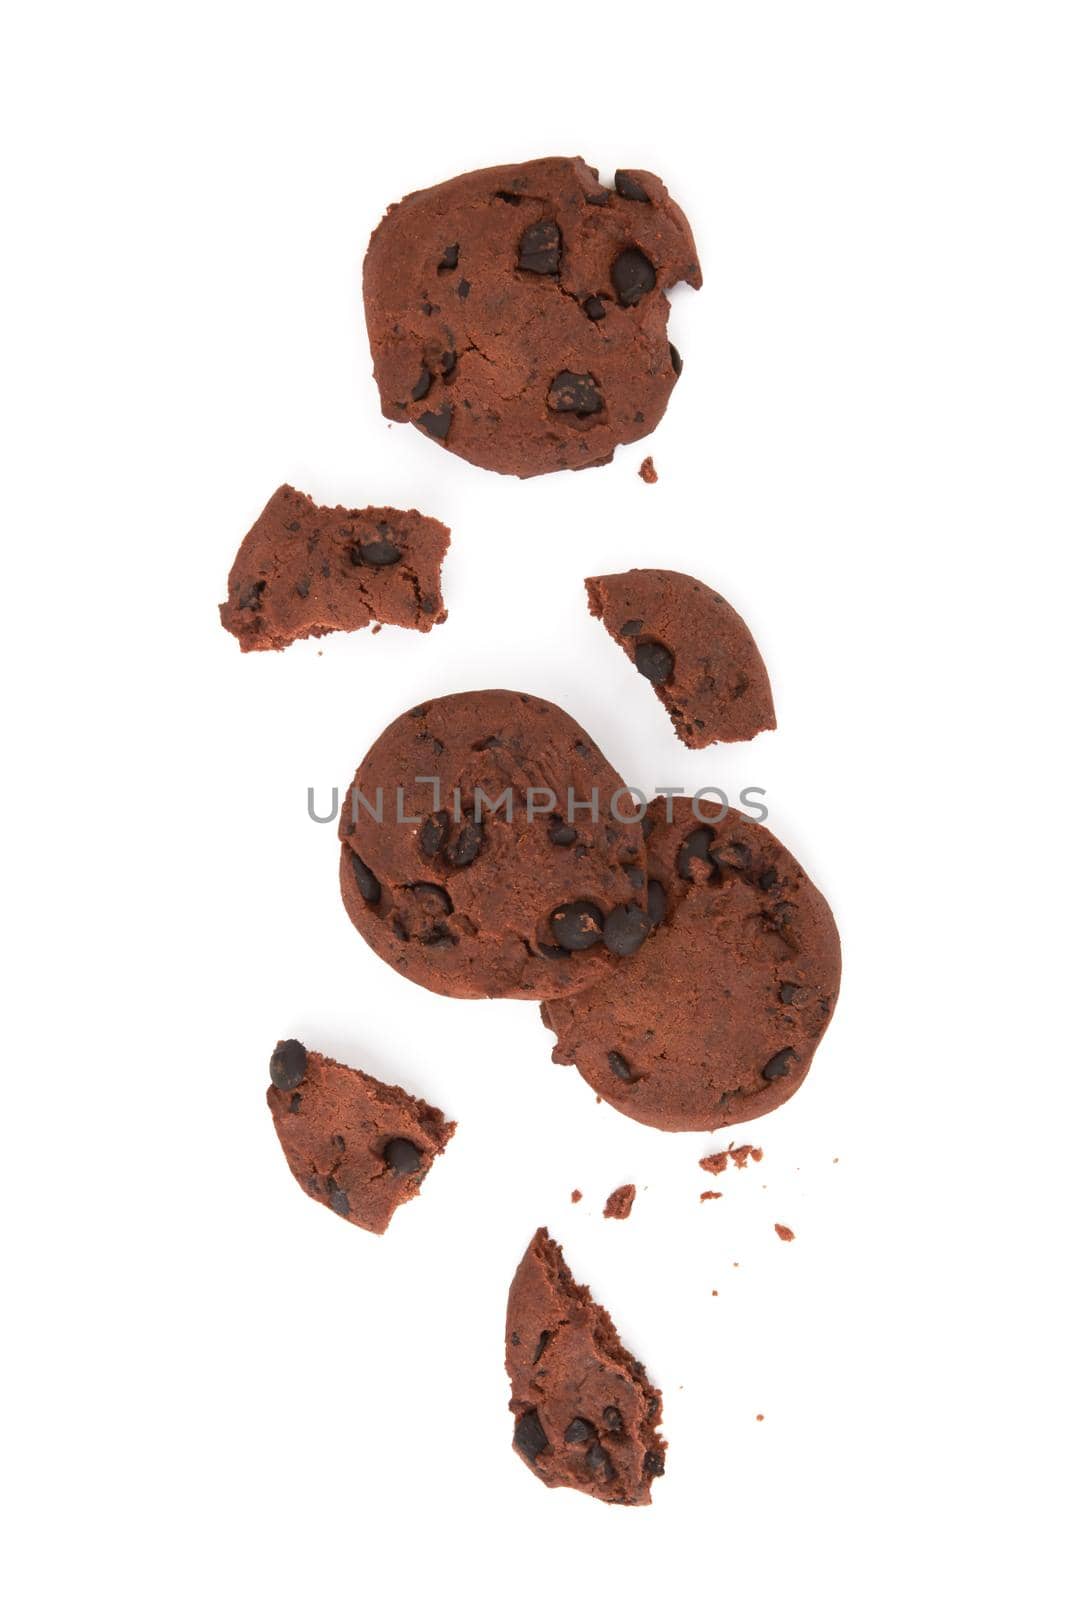 Chocolate chip cookies by pioneer111